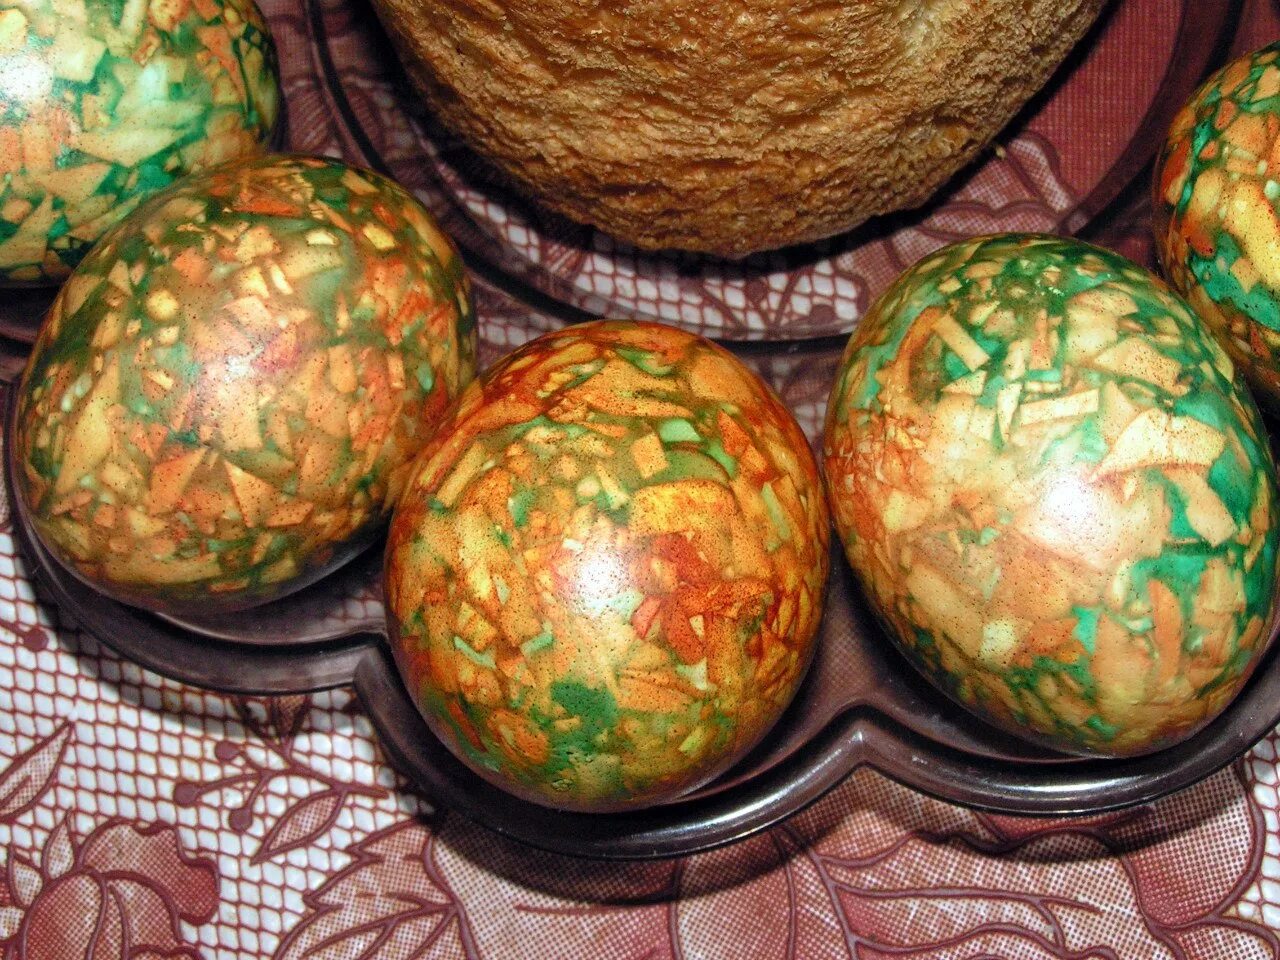 Мраморные яйца в луковой шелухе с зеленкой. Мраморные яйца в луковой шелухе. Яйца мраморные с зеленкой и шелухой. Яйца крашеные зеленкой и луковой шелухой.